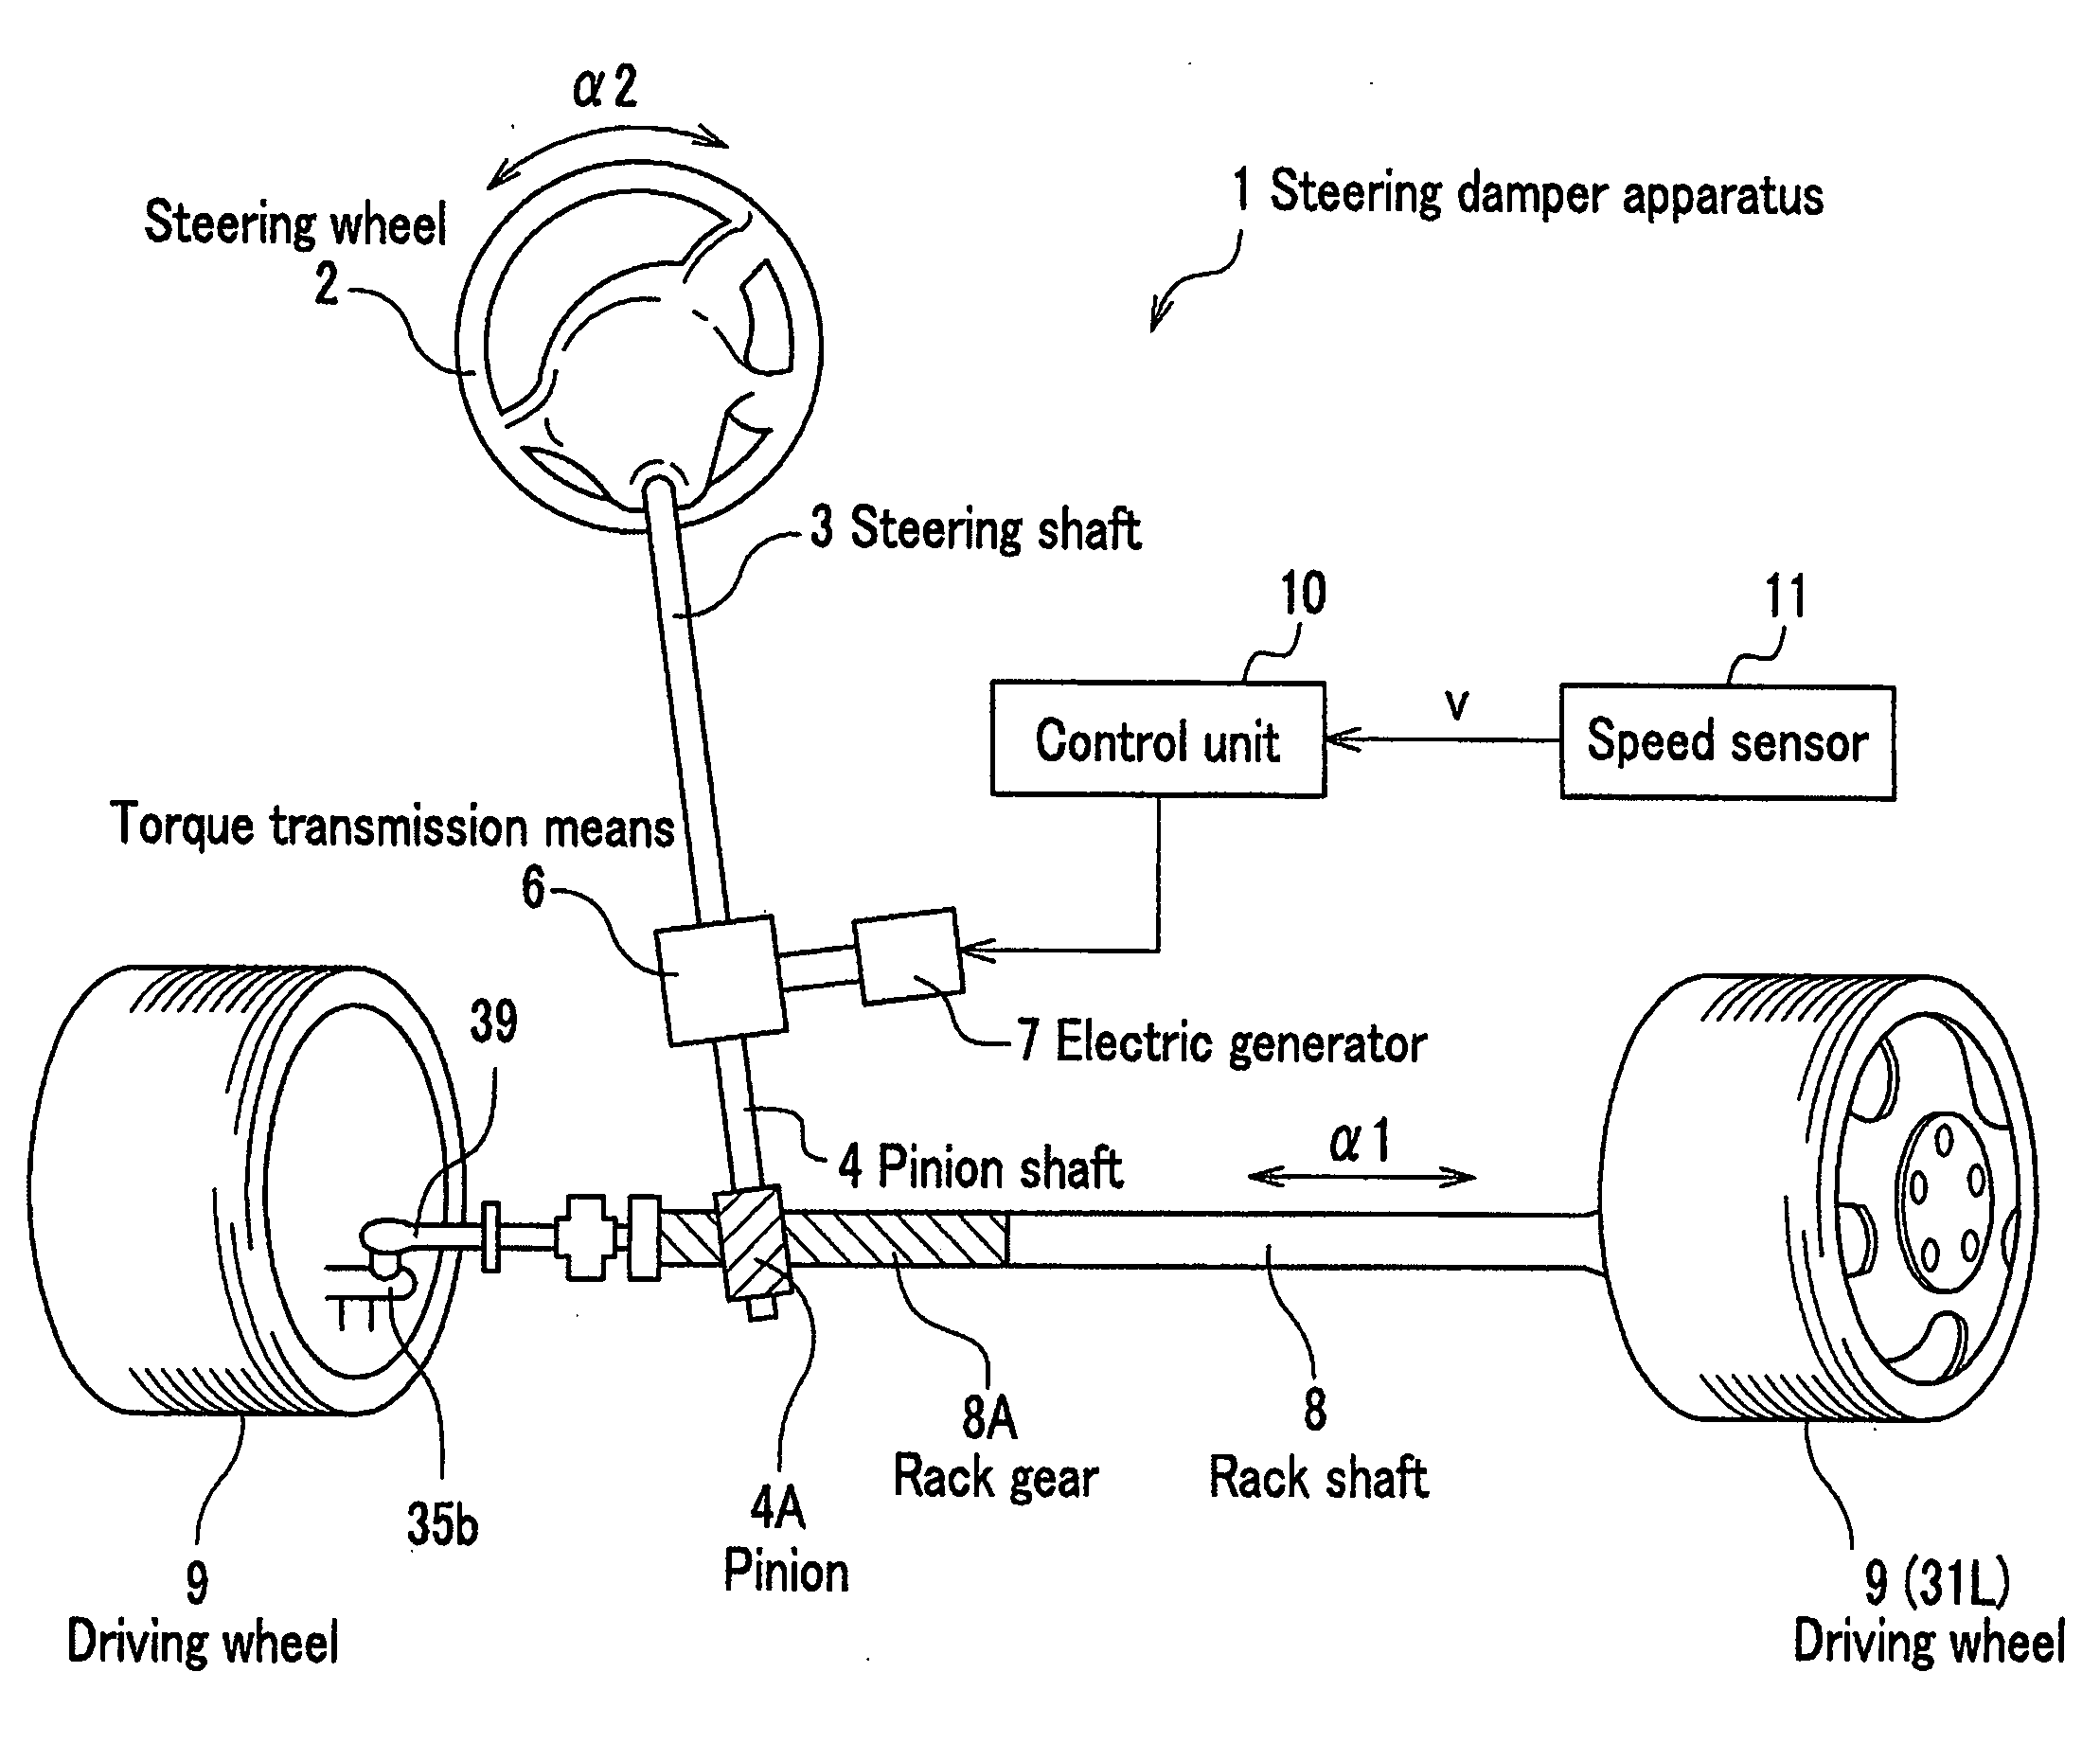 Vehicle steering apparatus